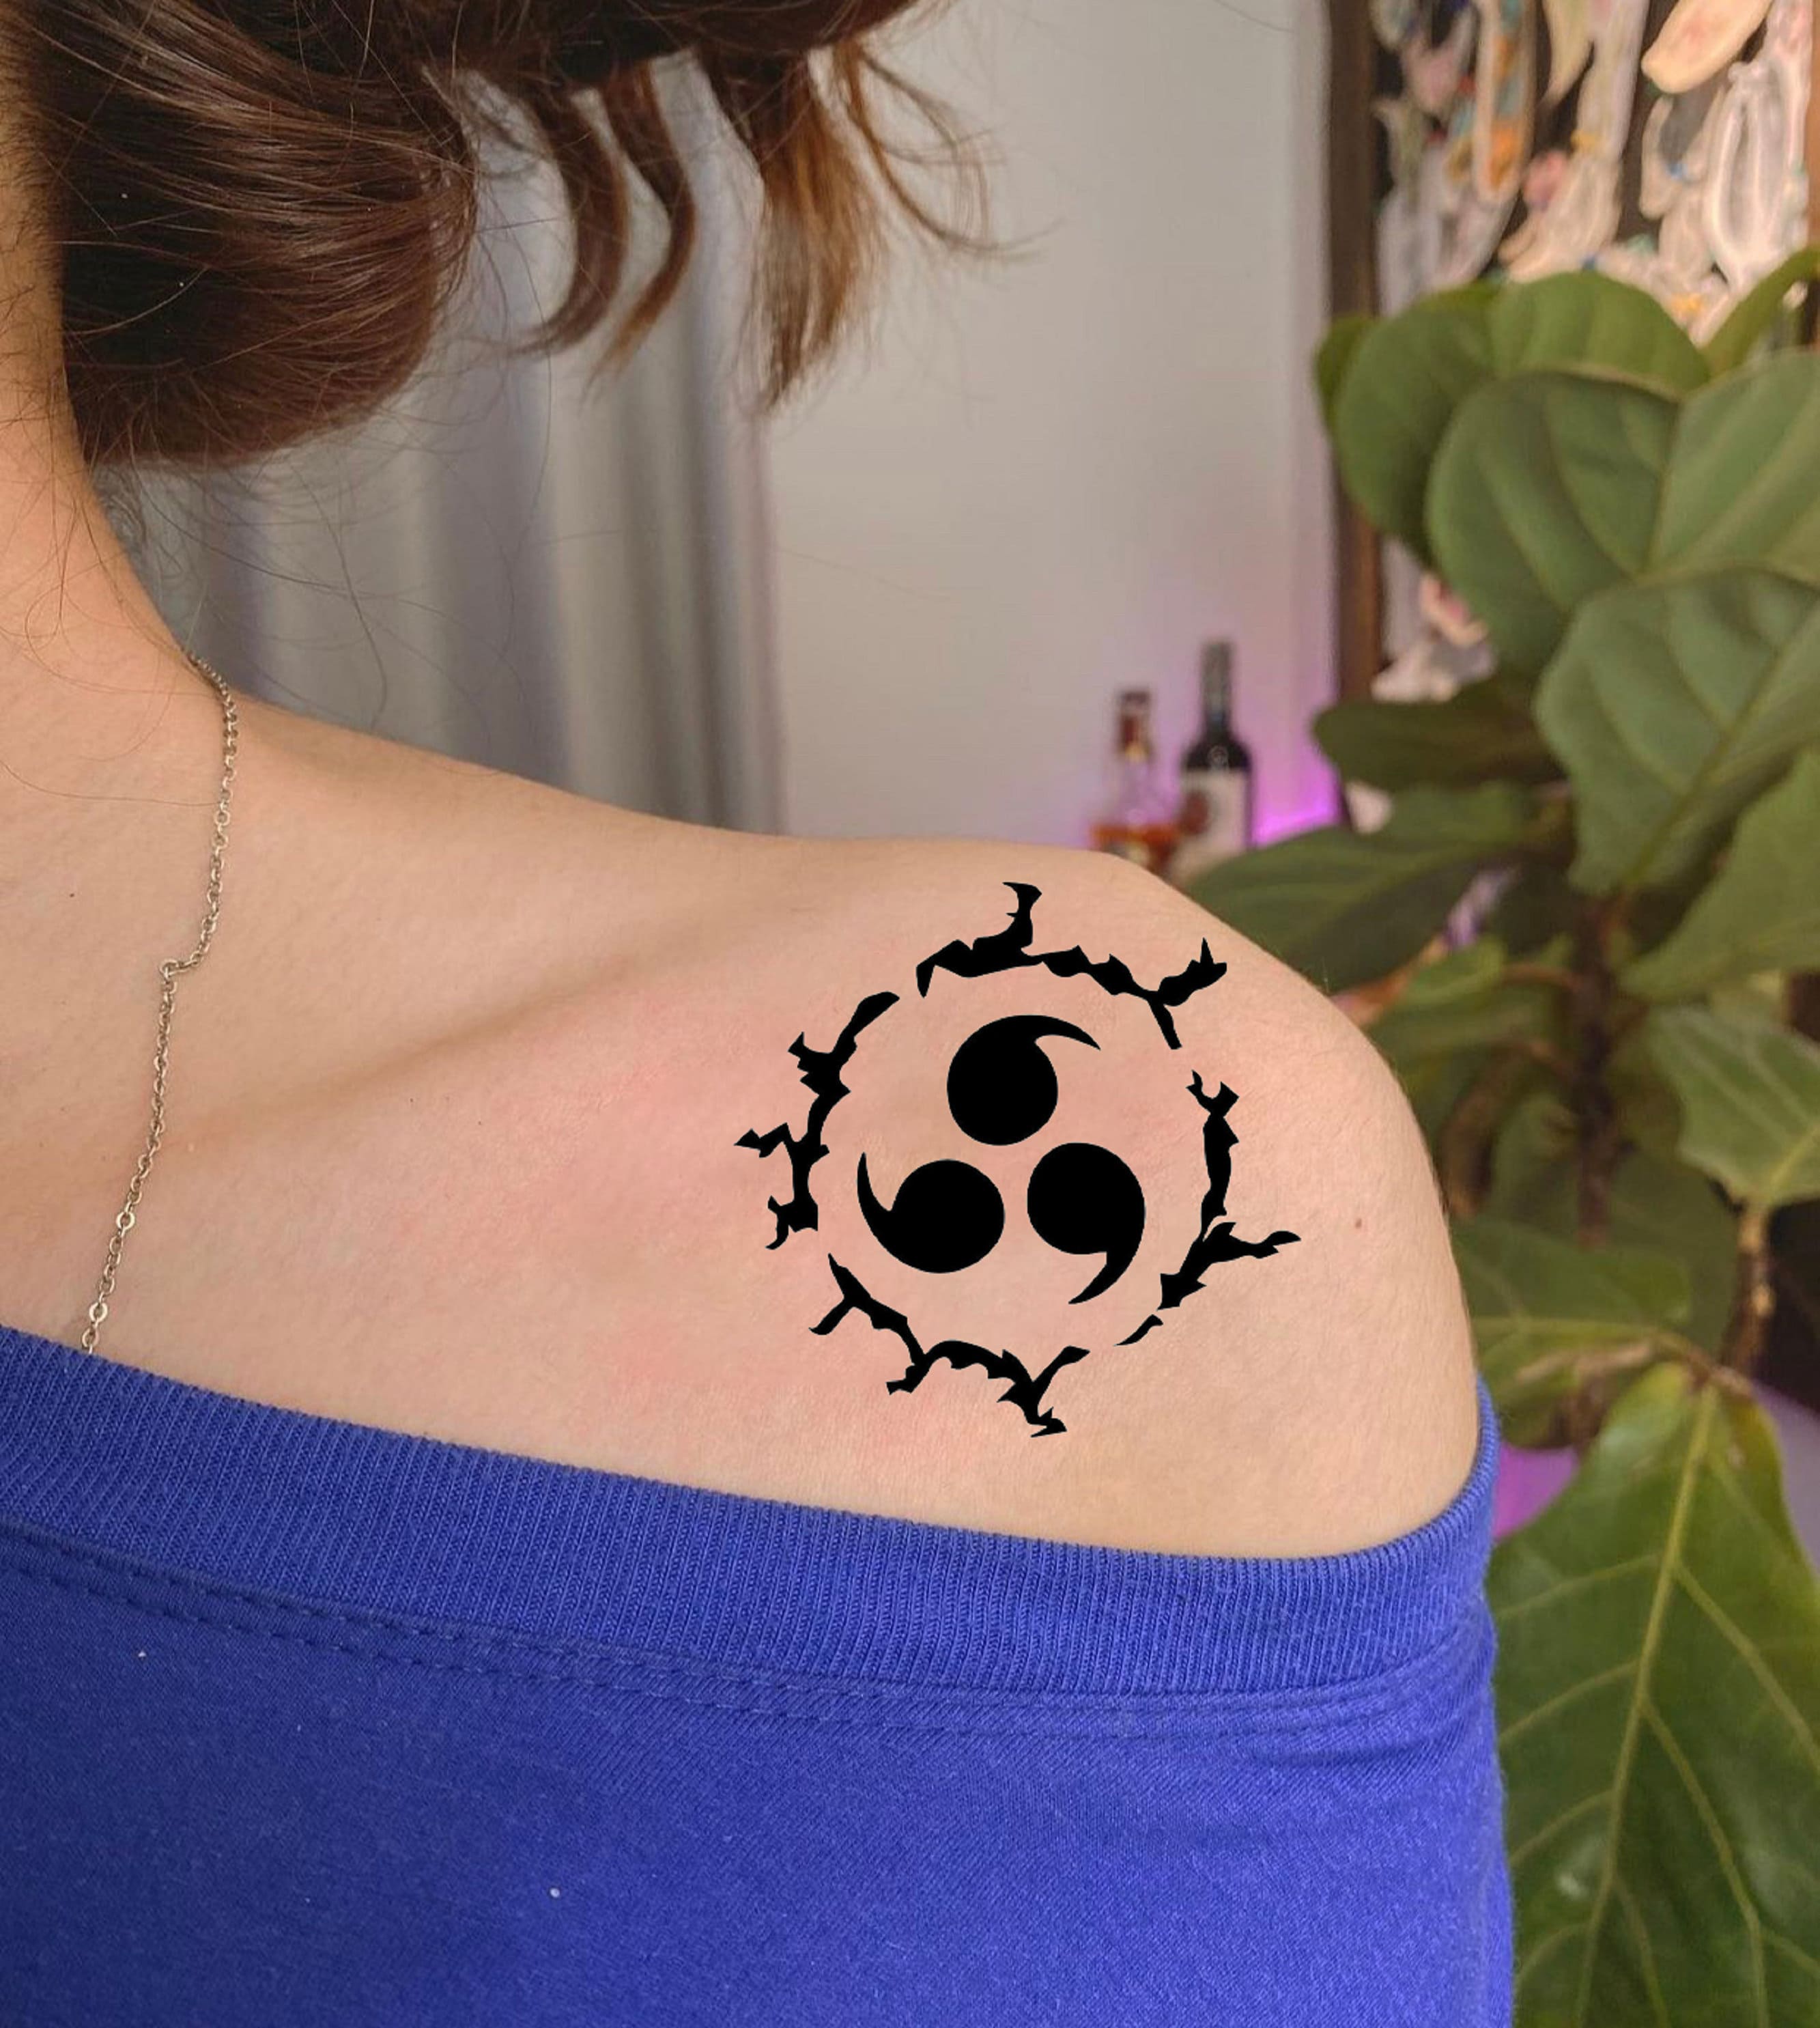 Cursed mark tattoo by sharin00 on DeviantArt